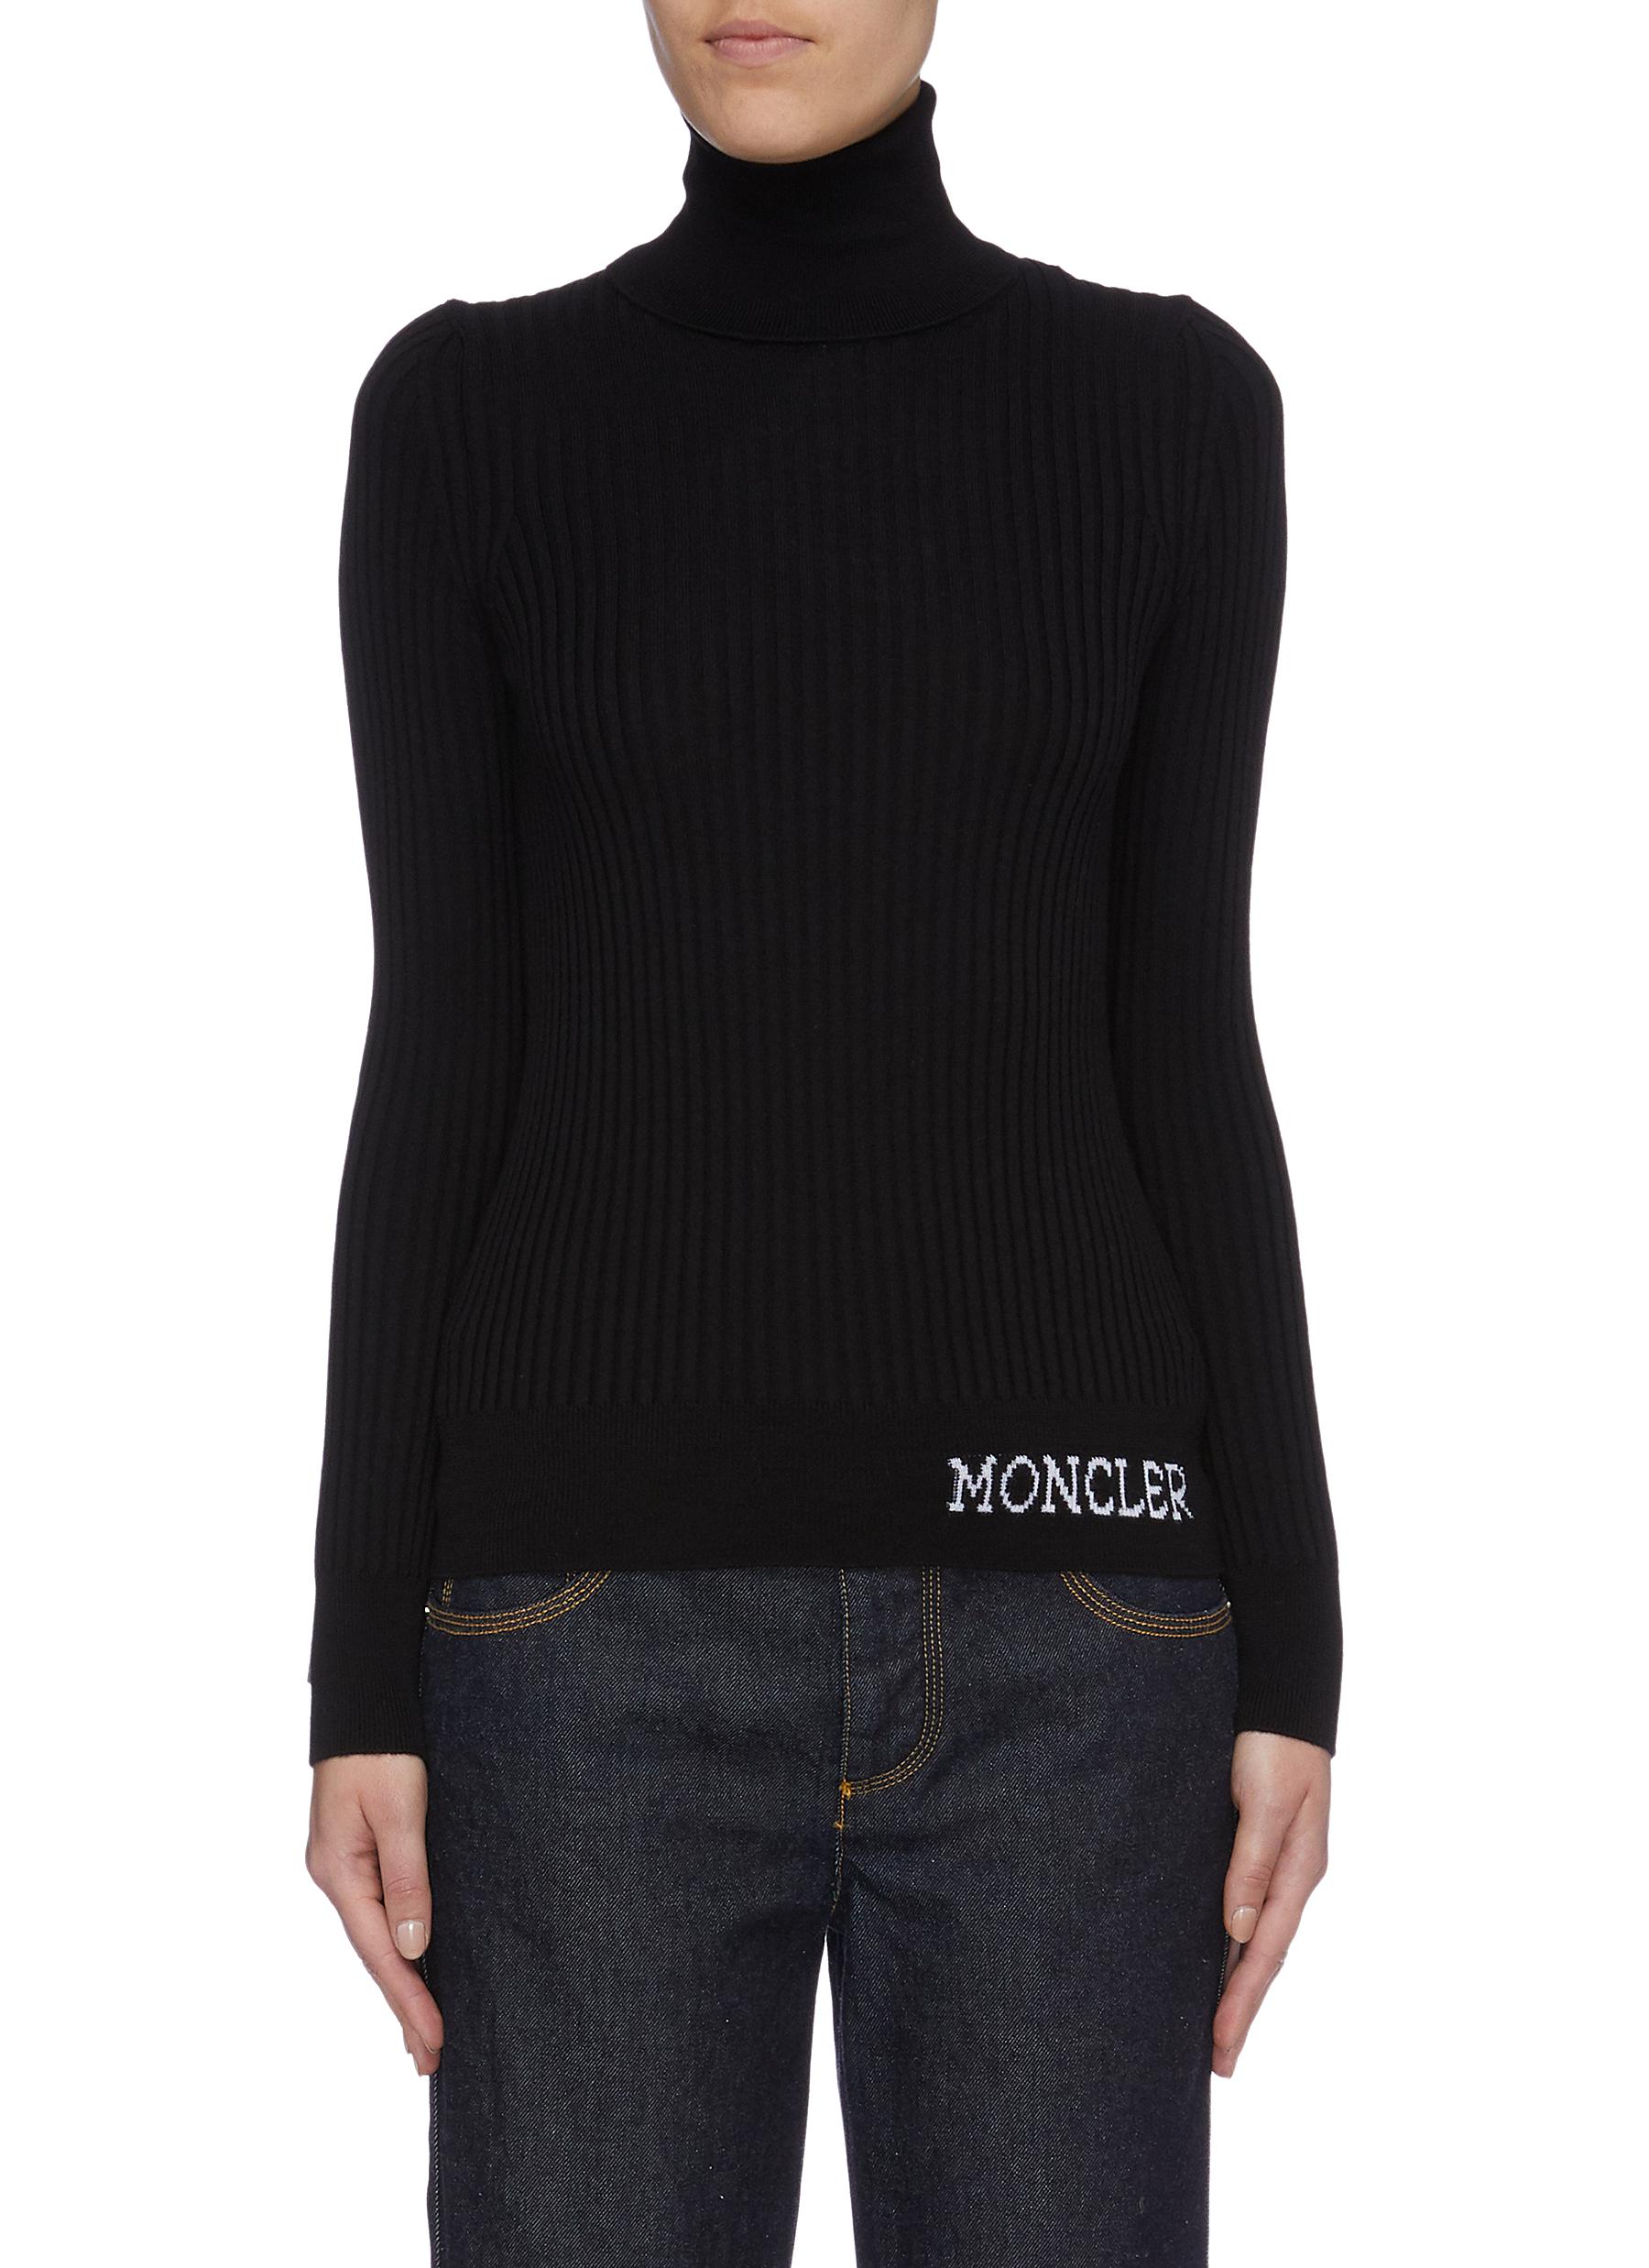 moncler sweater women's